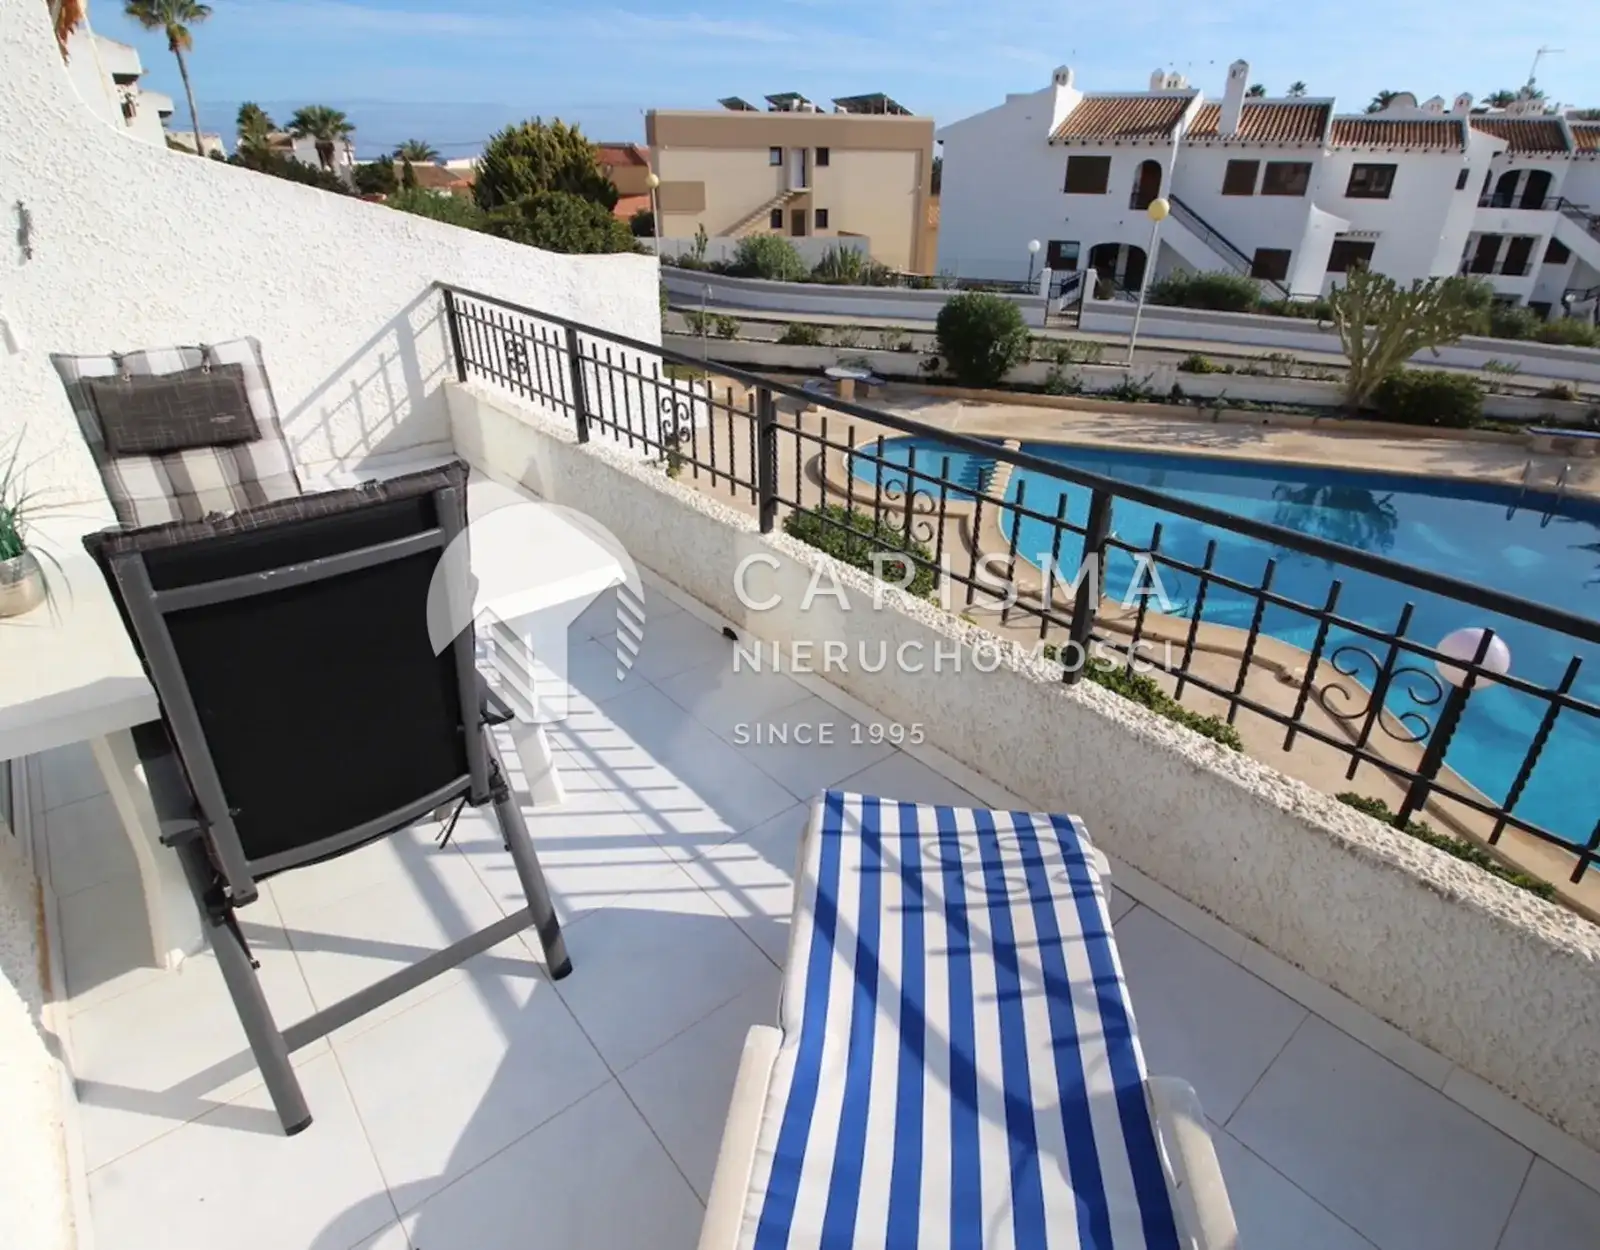 (7) Apartament w bardzo dobrej lokalizacji, Cabo Roig, Costa Blanca